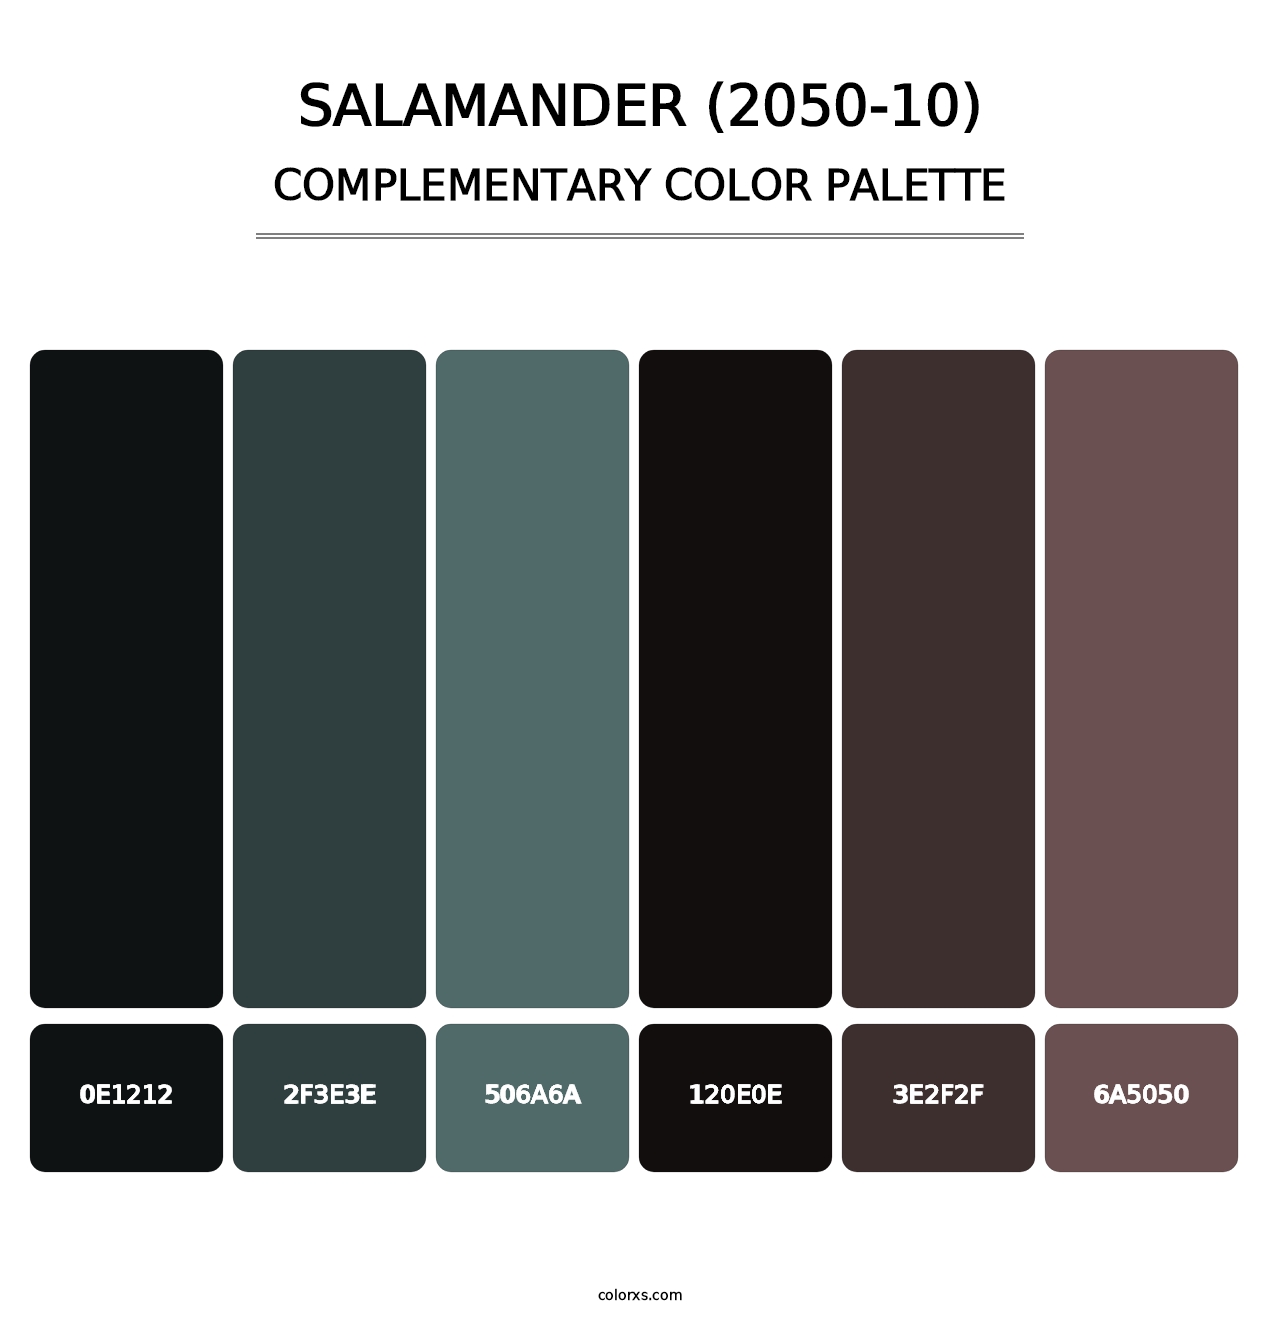 Salamander (2050-10) - Complementary Color Palette